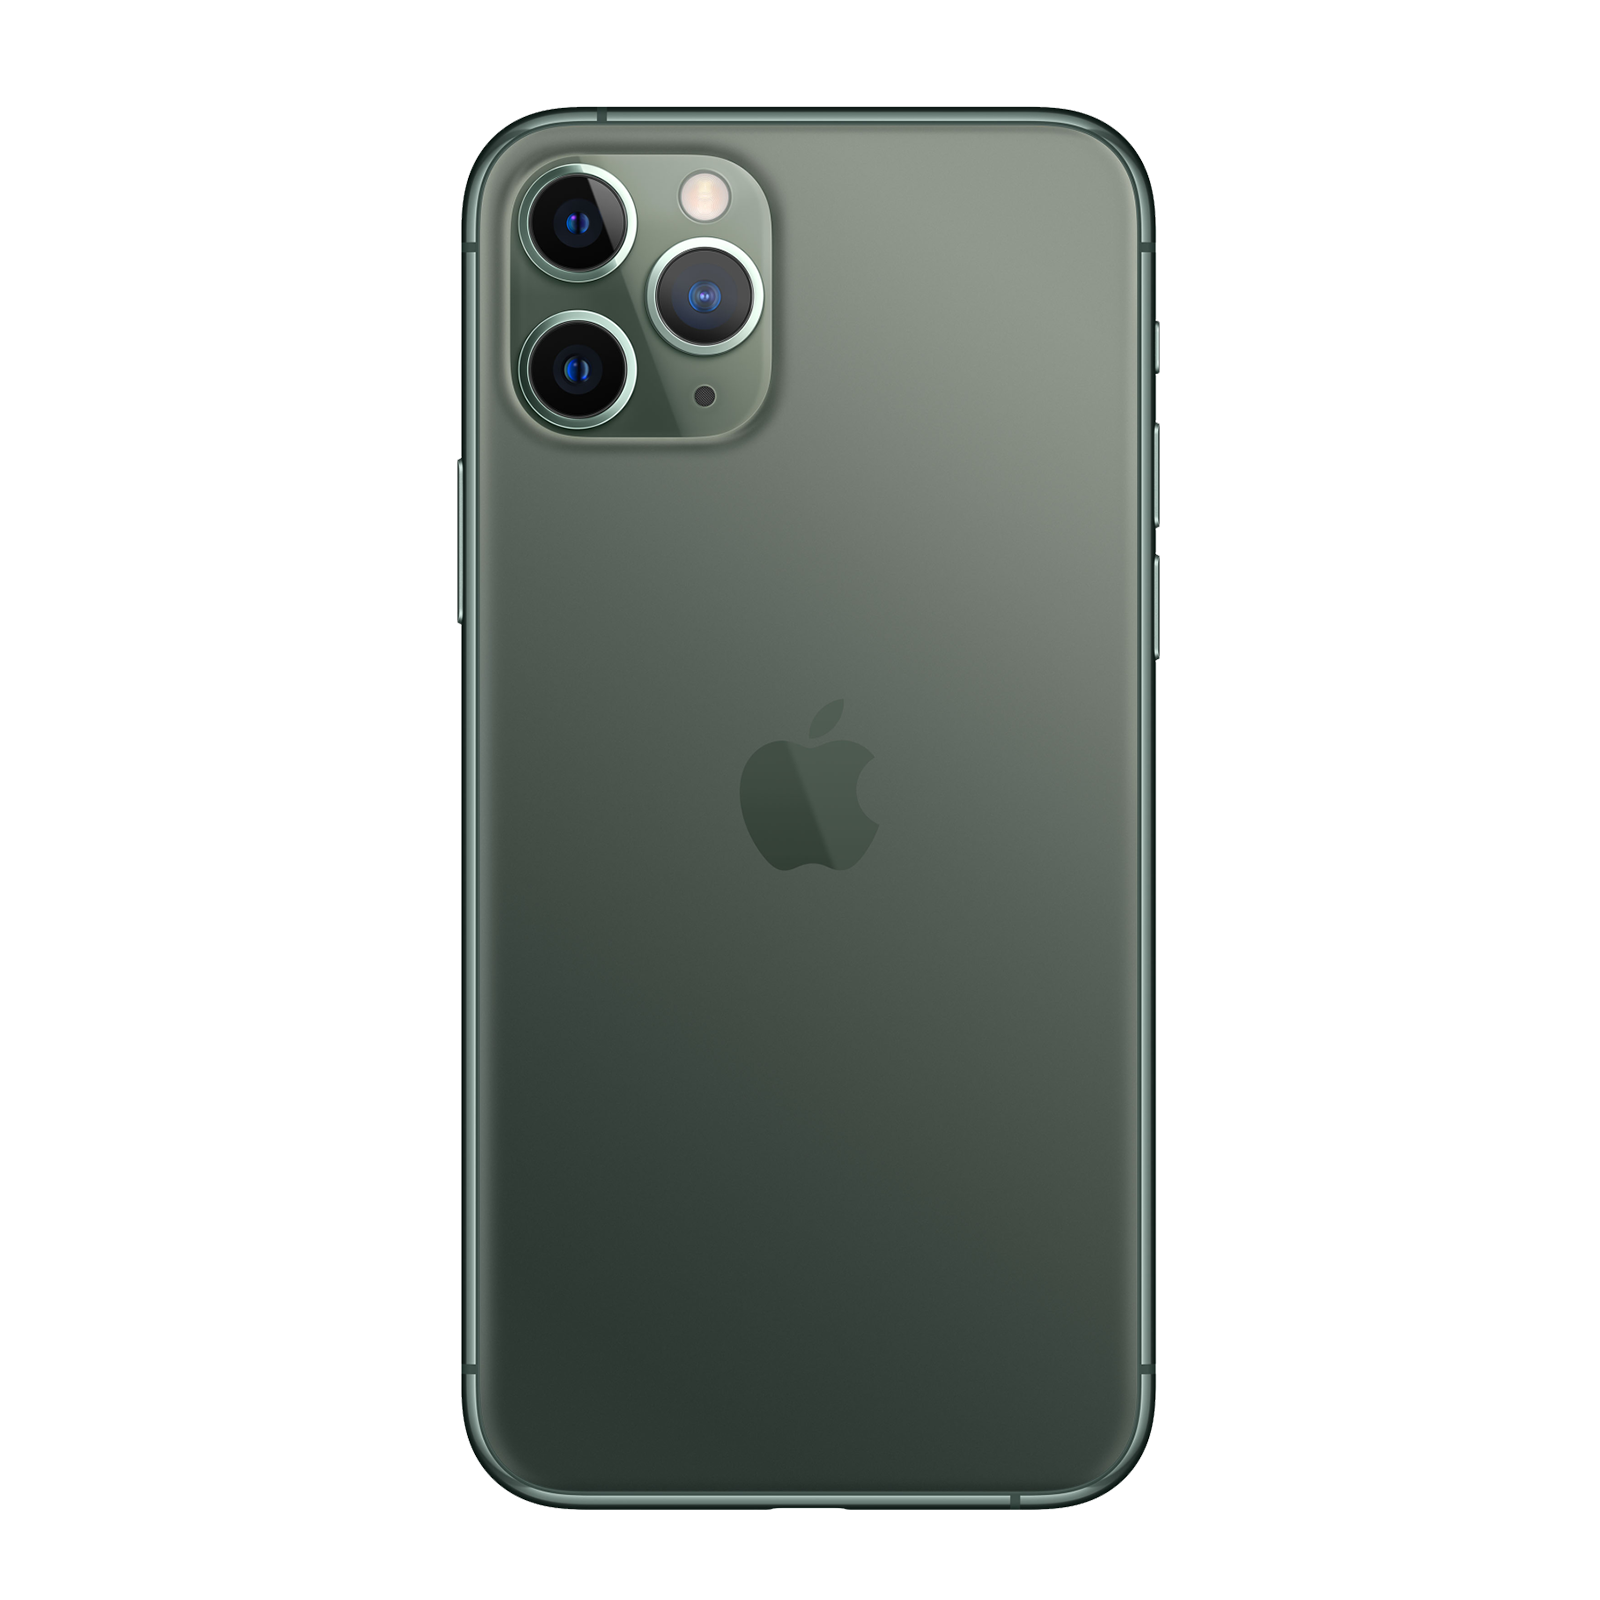 Apple iPhone 11 Pro Max 256GB Midnight Green Good - Unlocked